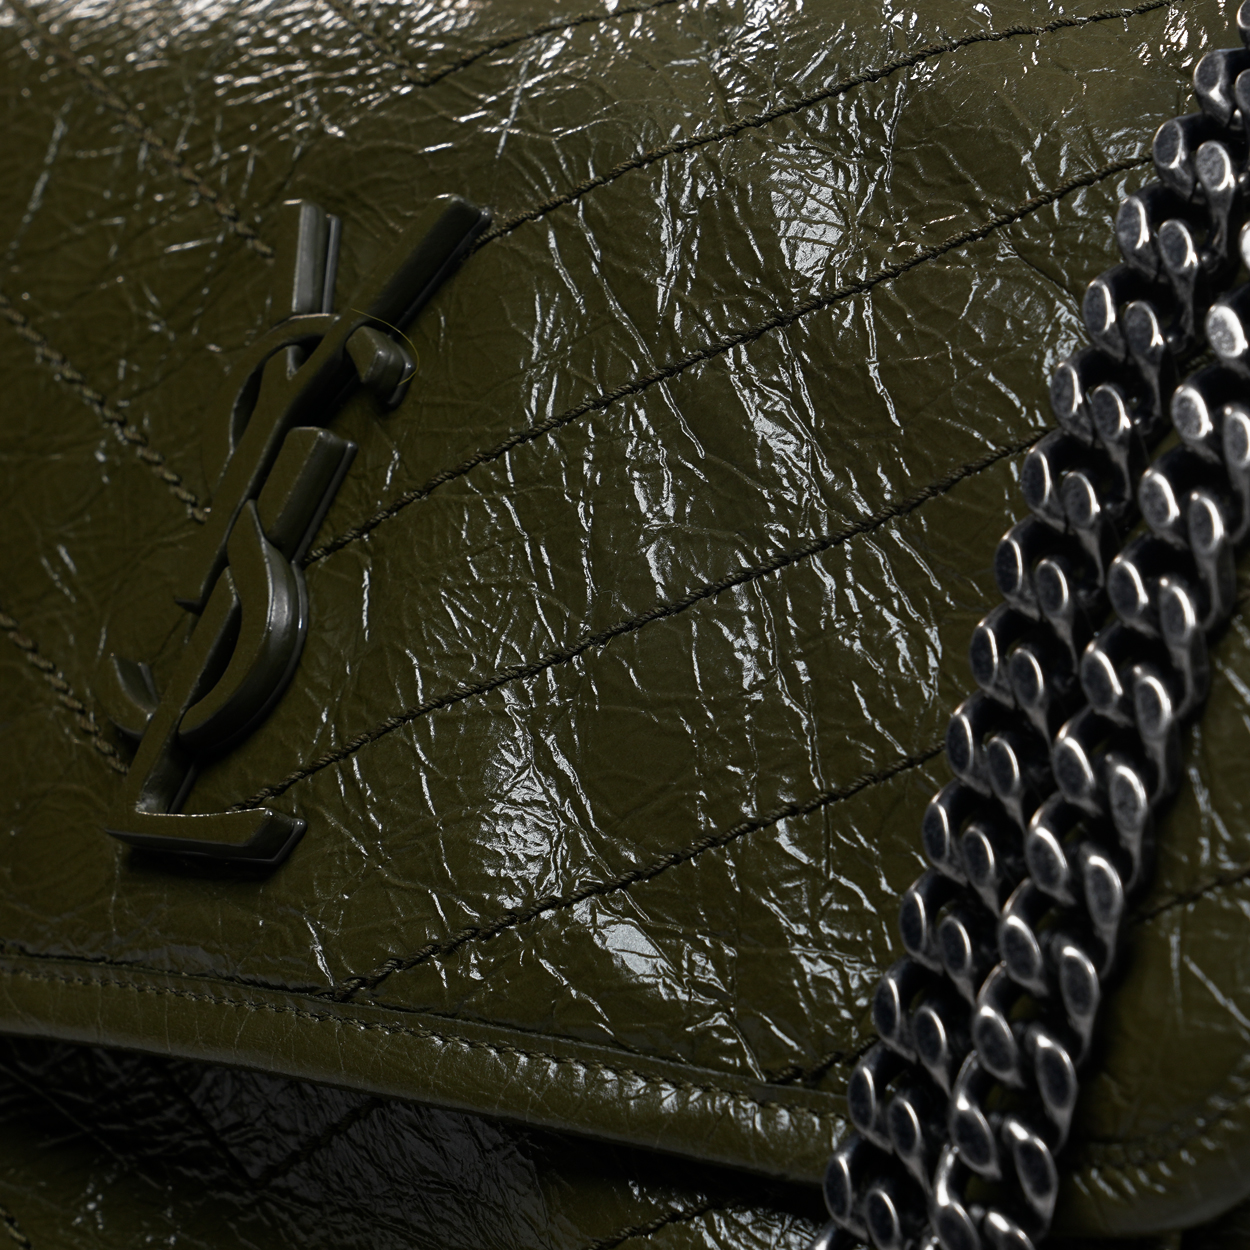 Yves Saint Laurent - Khaki Distressed Chevron Leather Medium Niki Bag